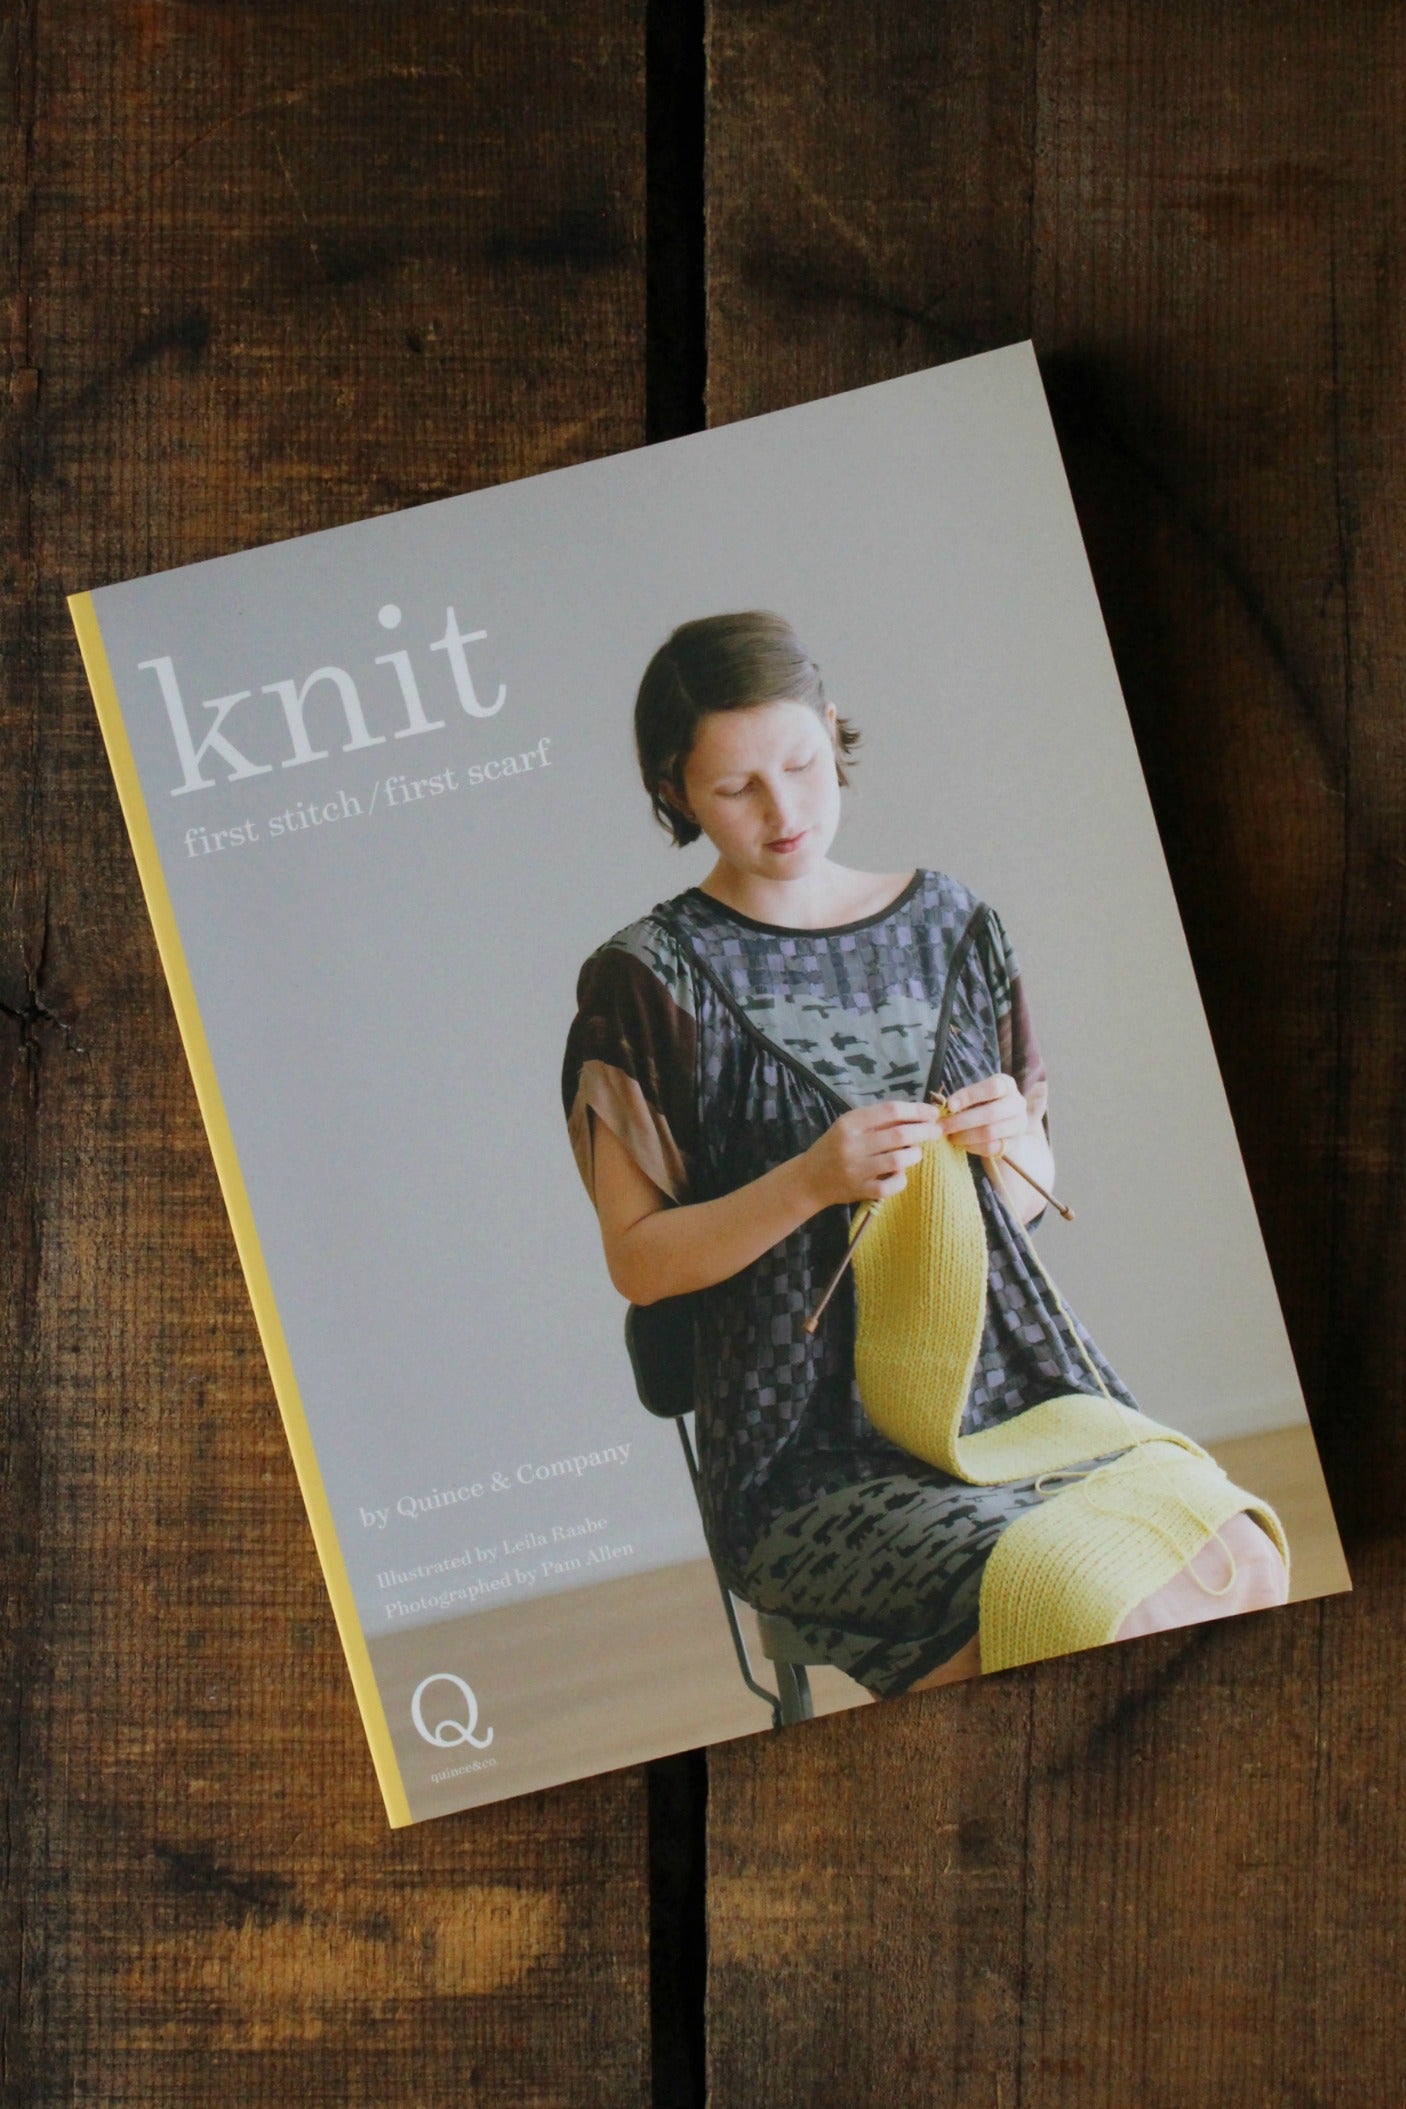 Knit: First Stitch, First Scarf